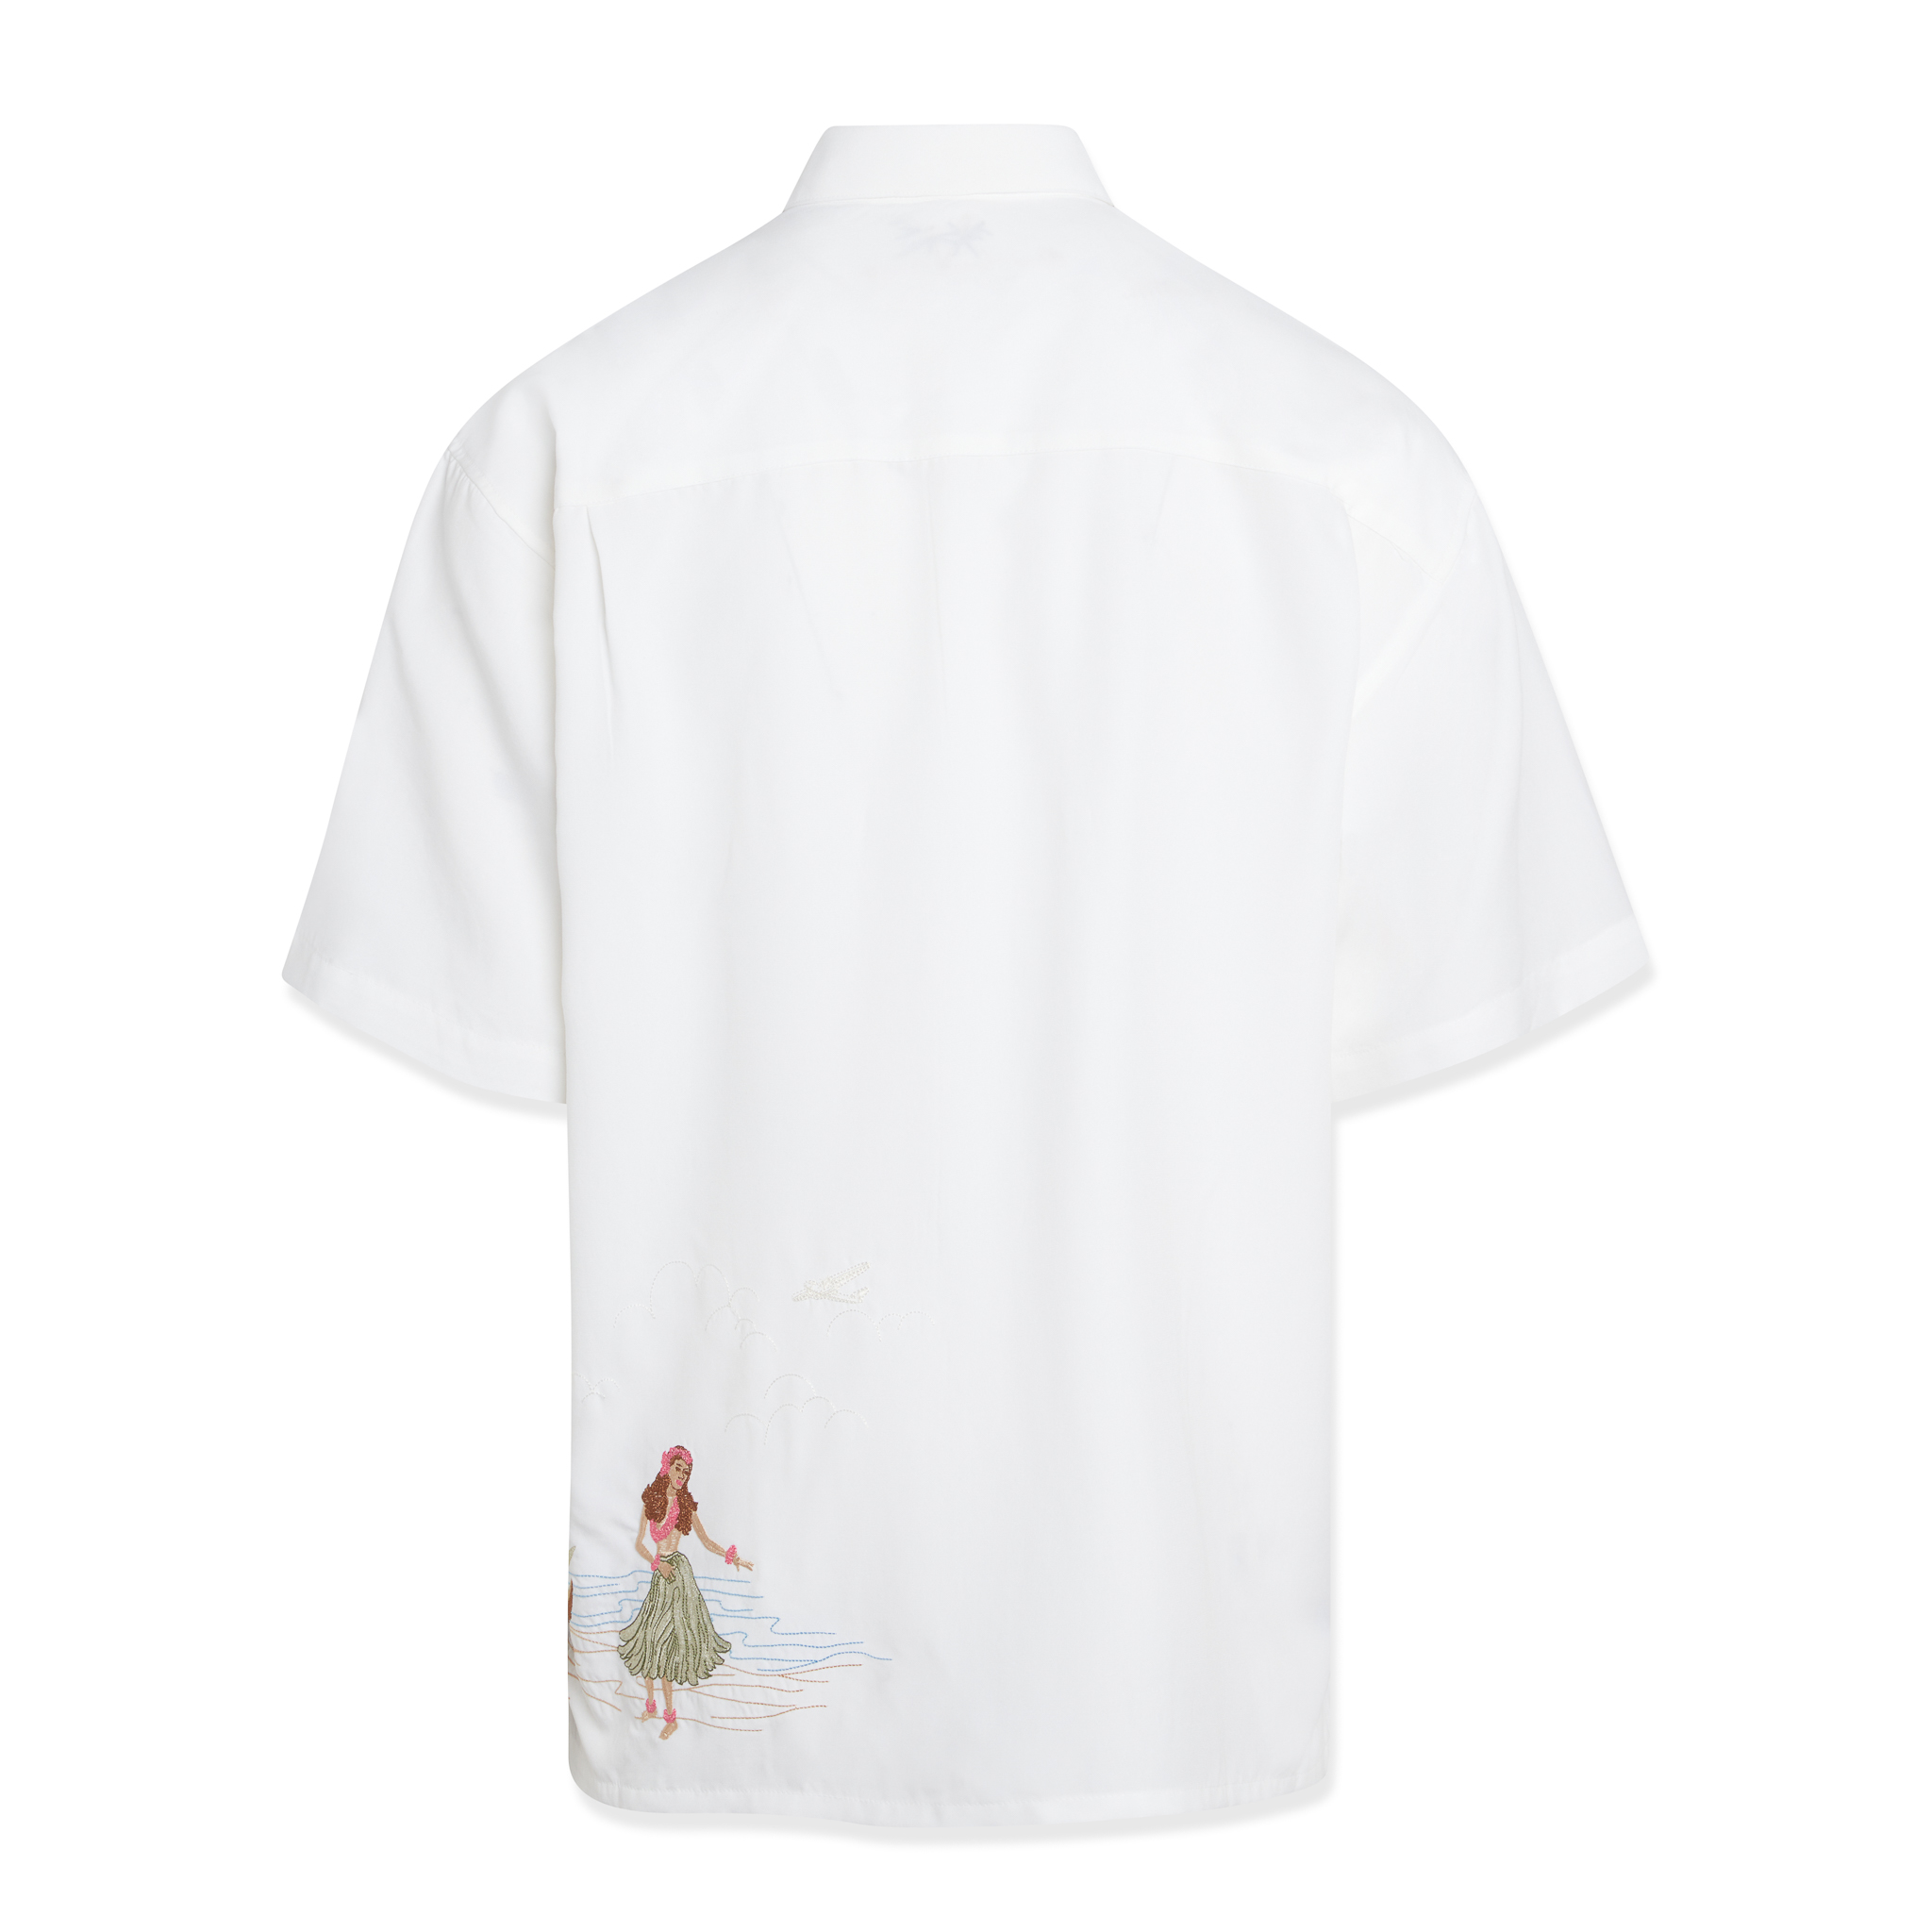 Bamboo cay embroidered mens short sleeve hula luau Hawaiian shirt